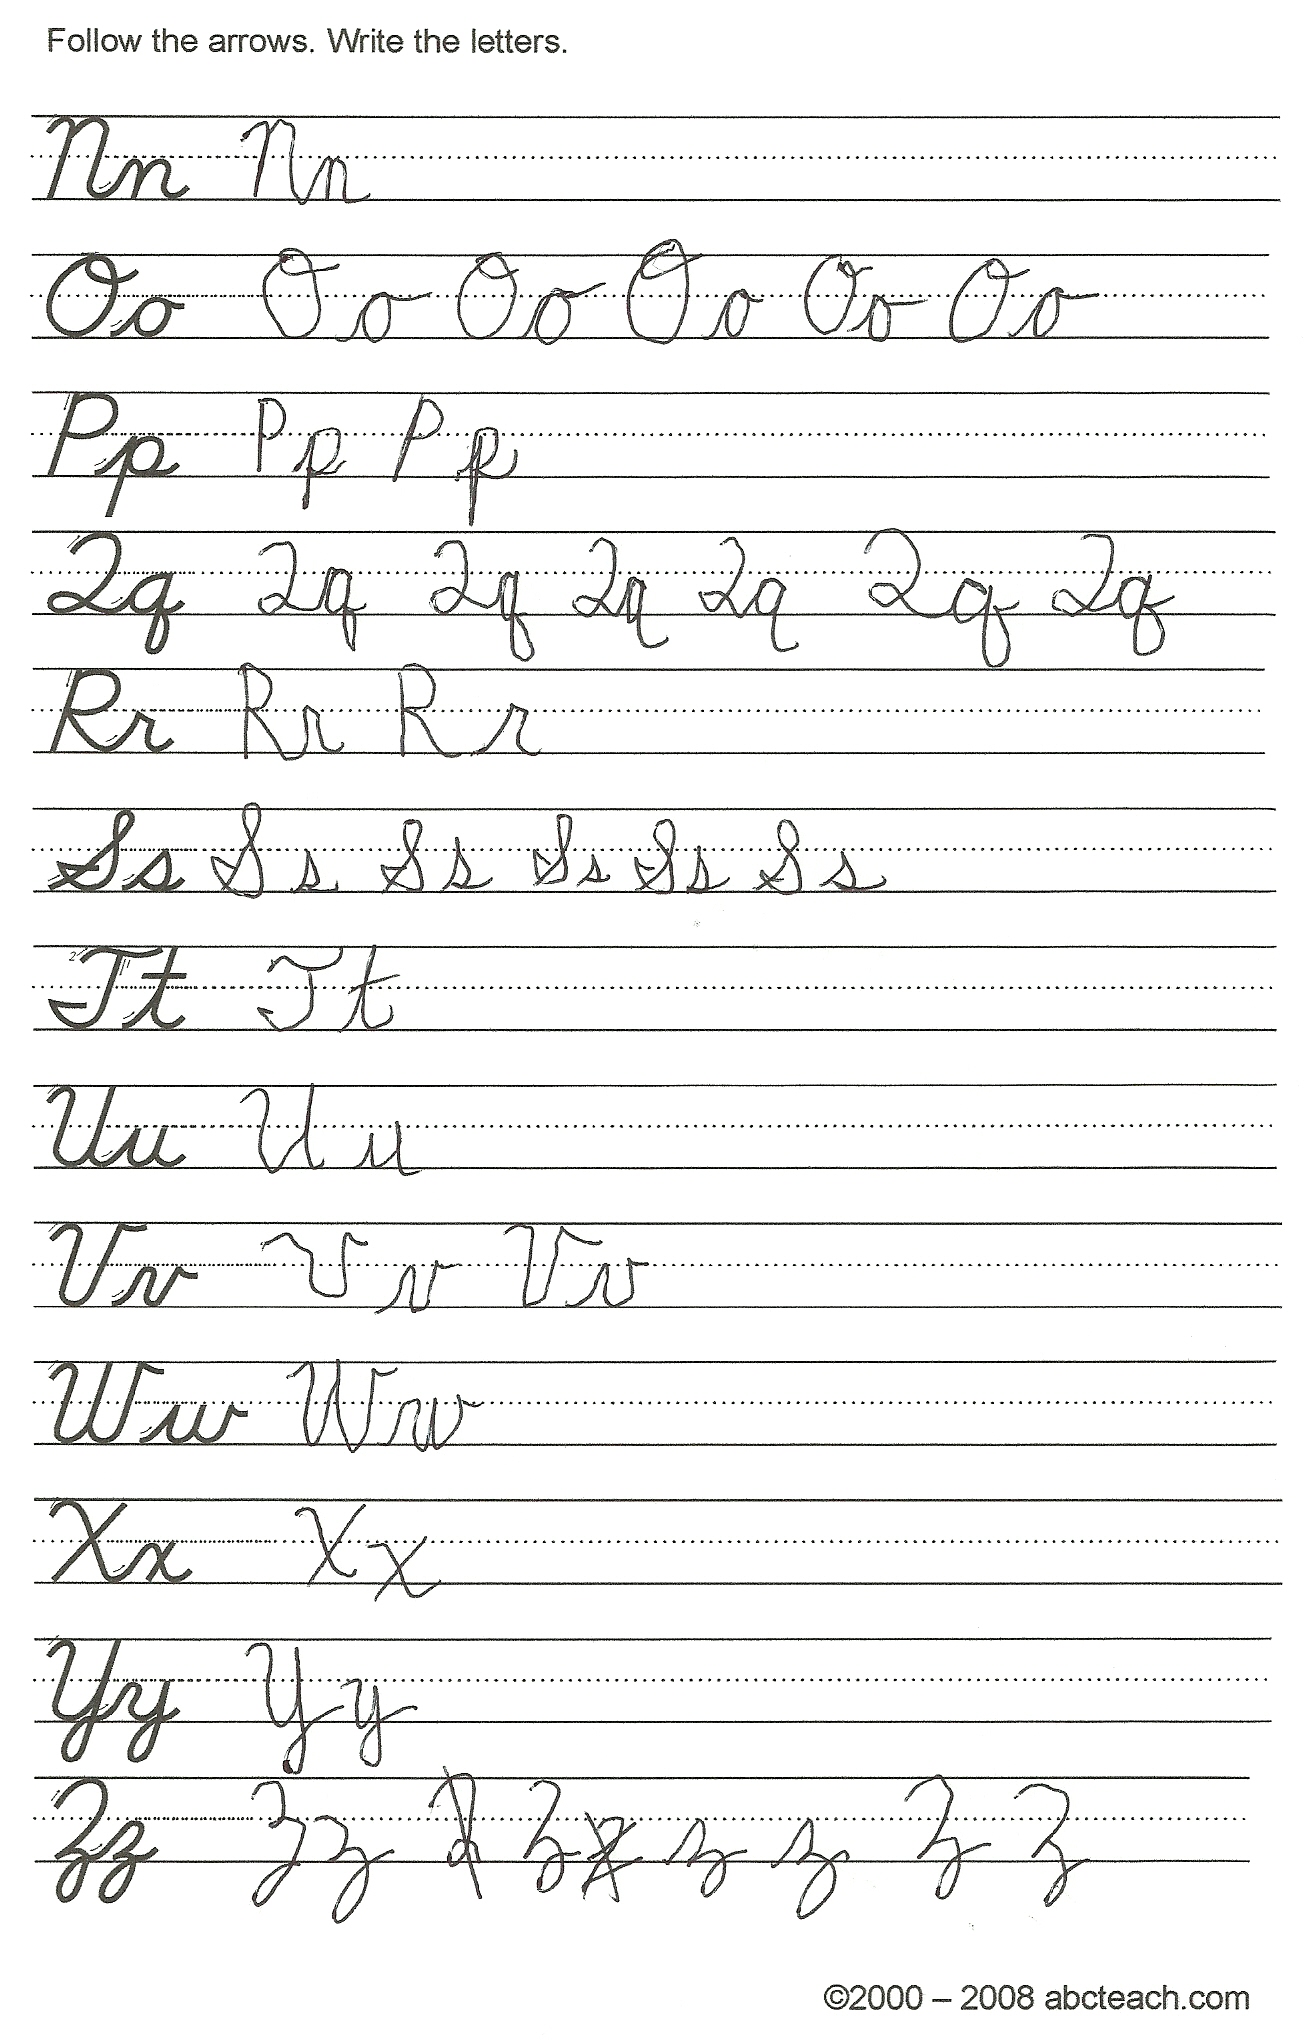 cursive-handwriting-my-life-with-nf2